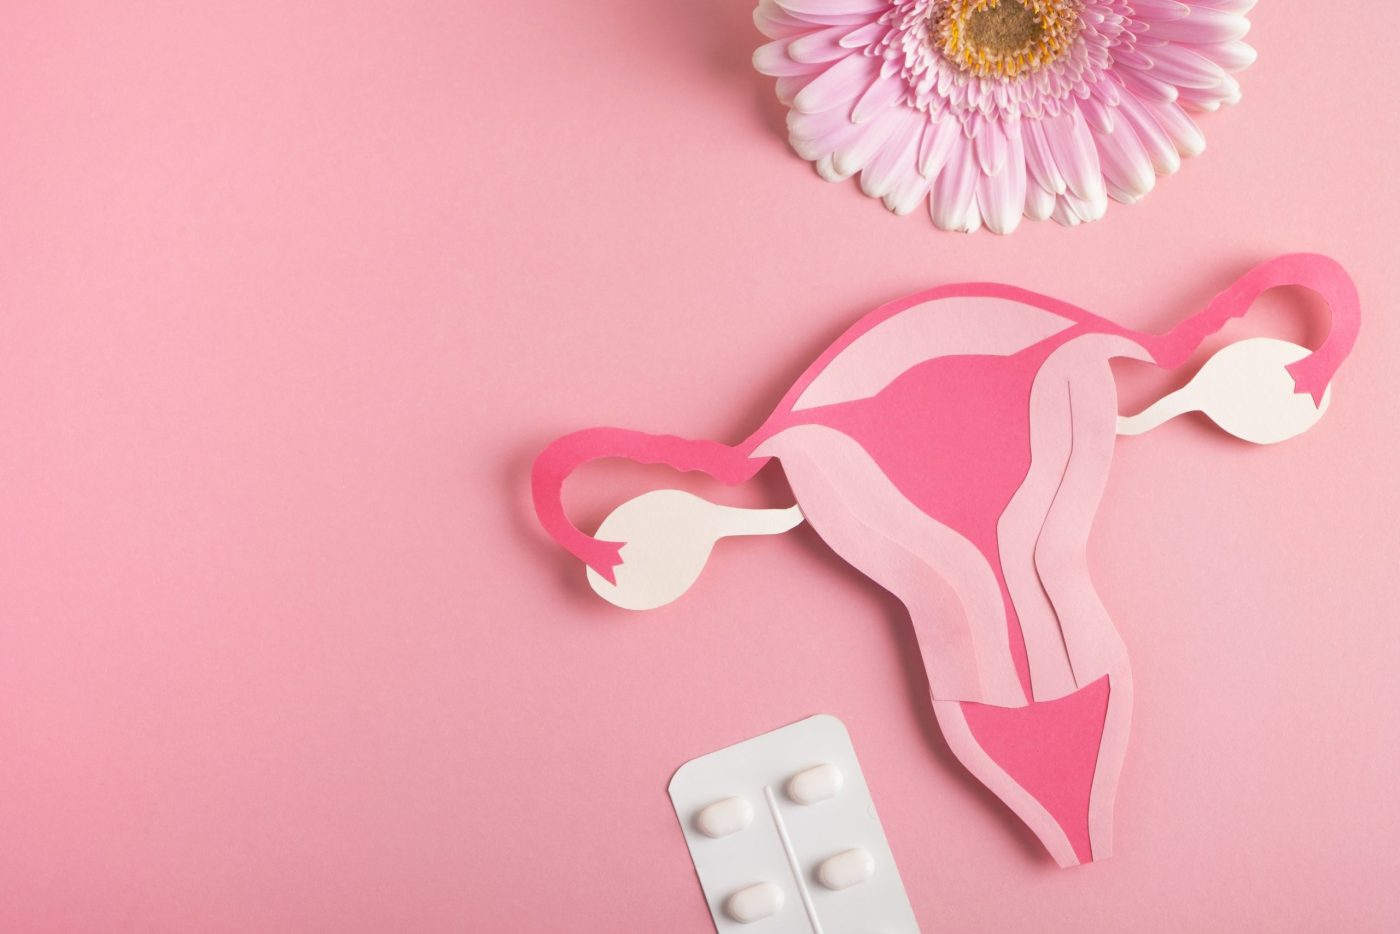 Endometrial Hyperplasia: Causes, Symptoms, Treatment